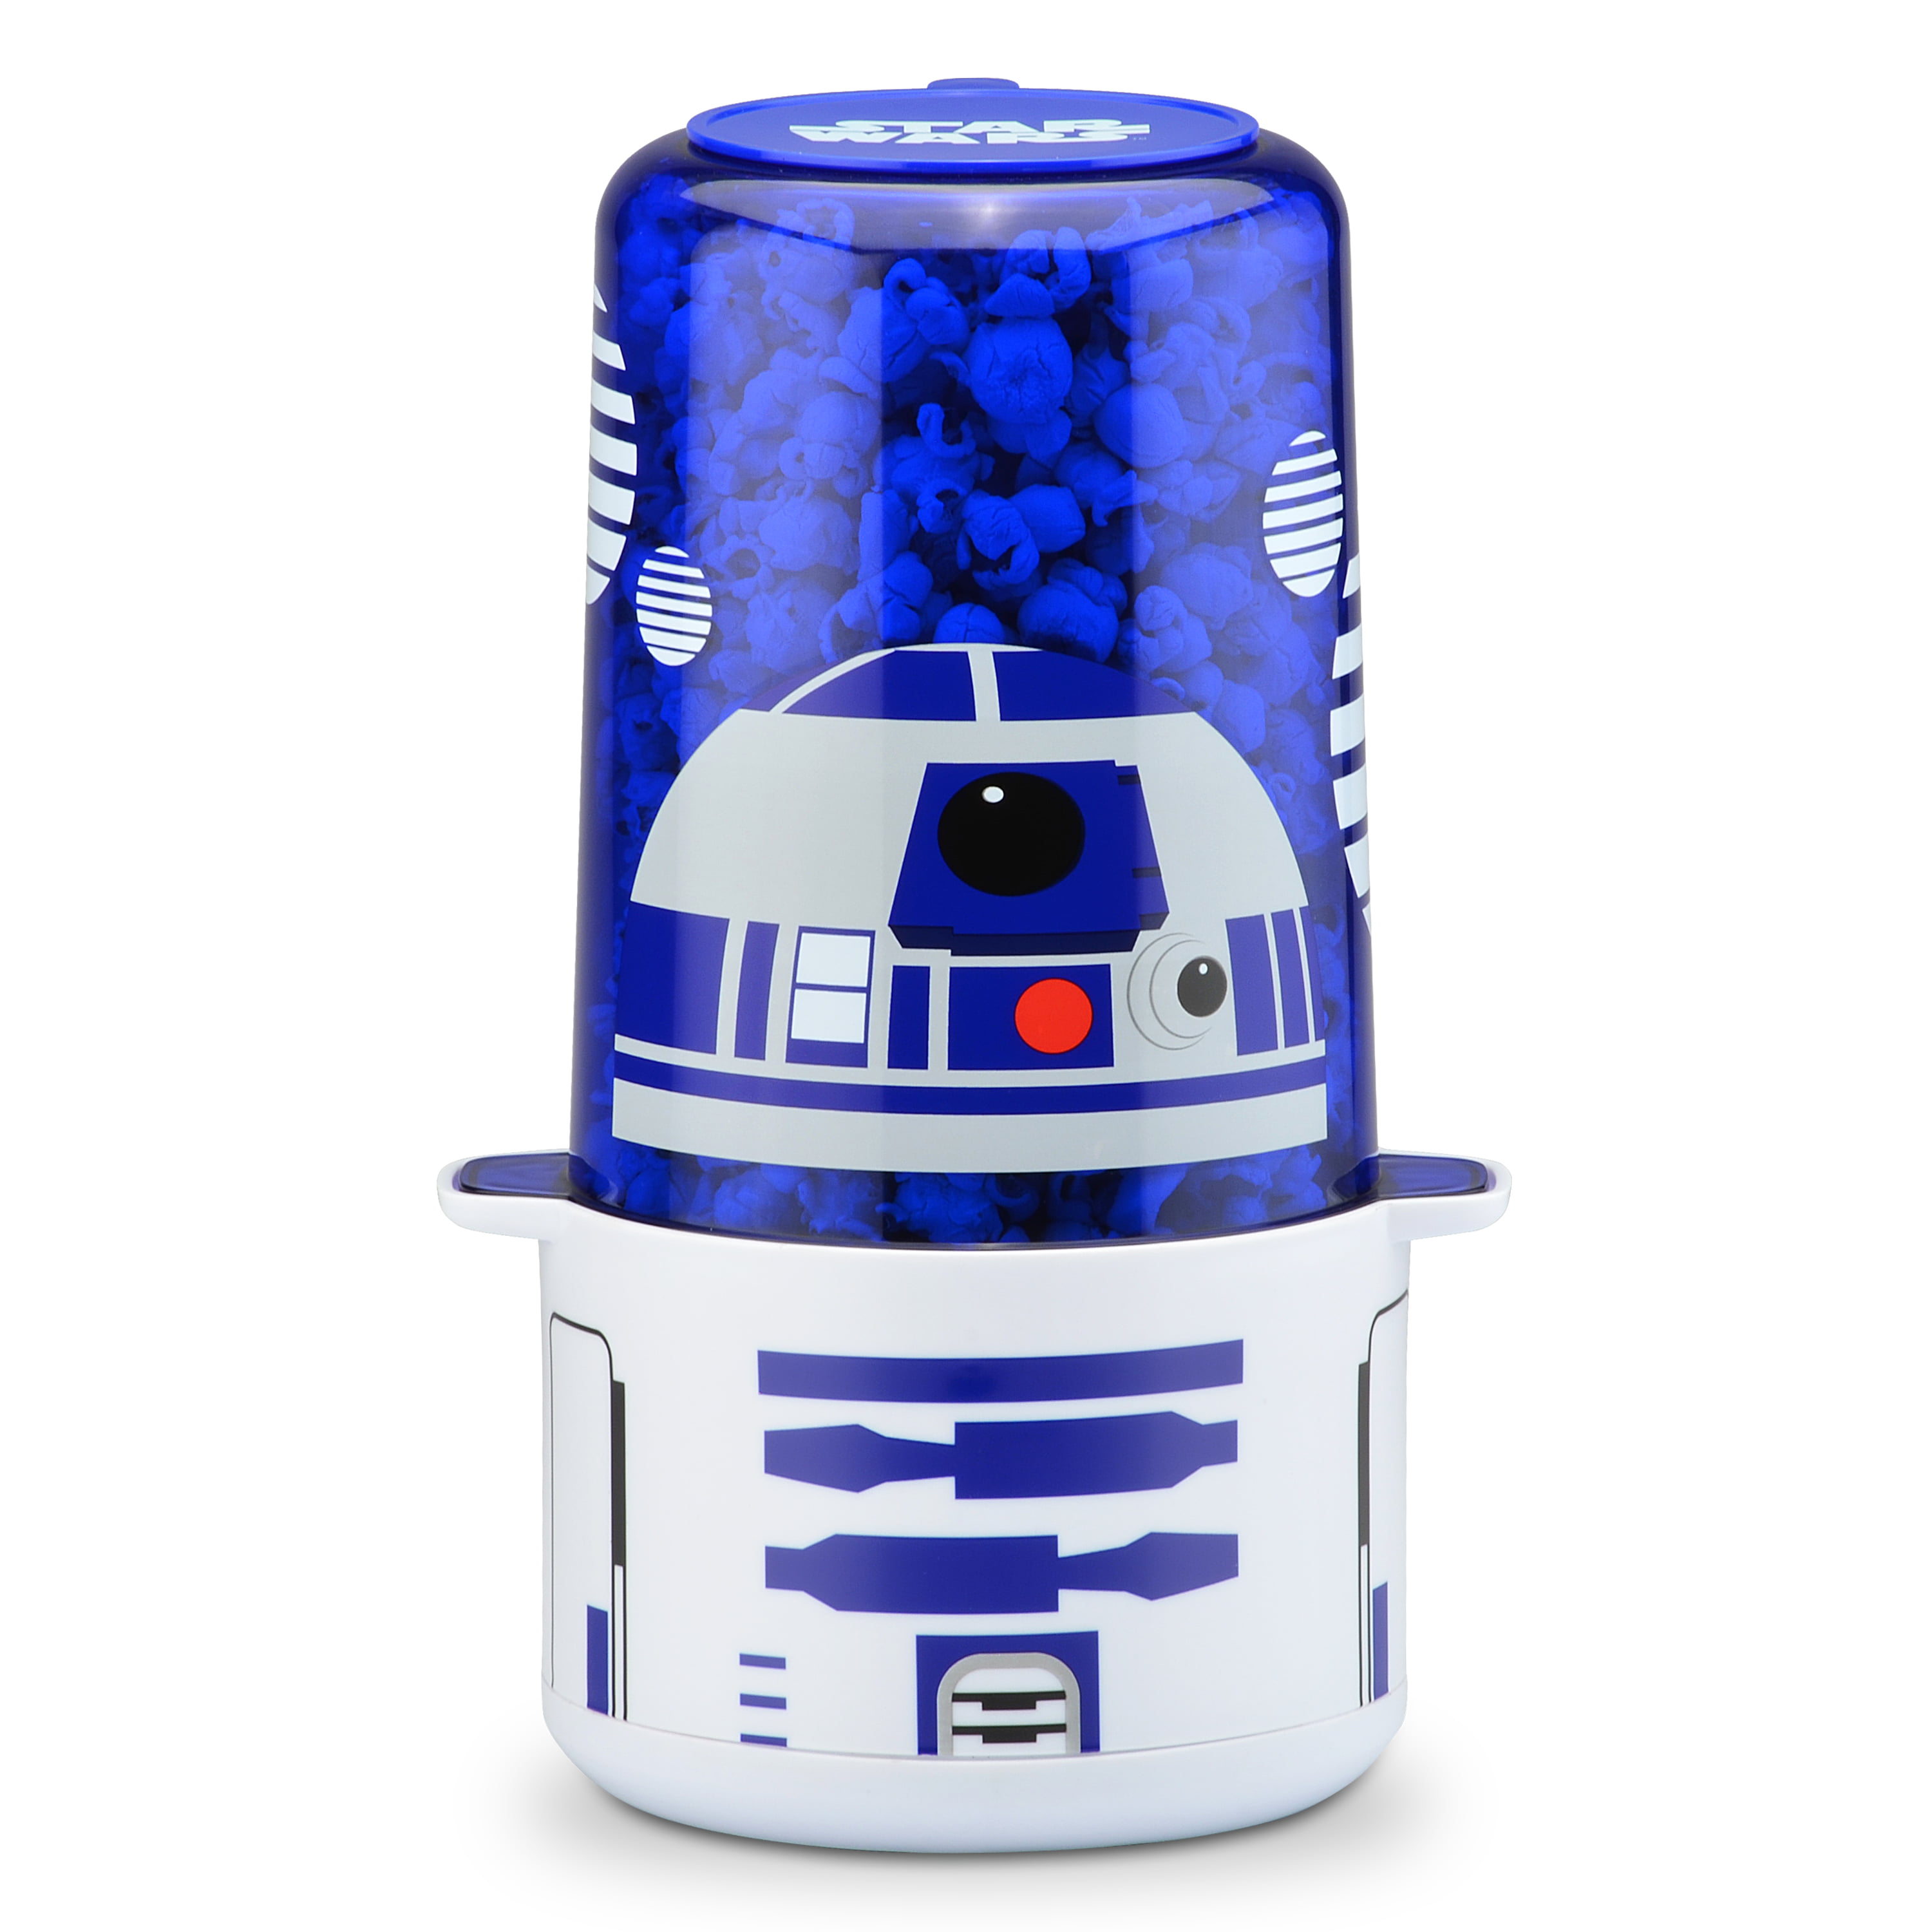 Star Wars R2-D2 Stir Popcorn Popper